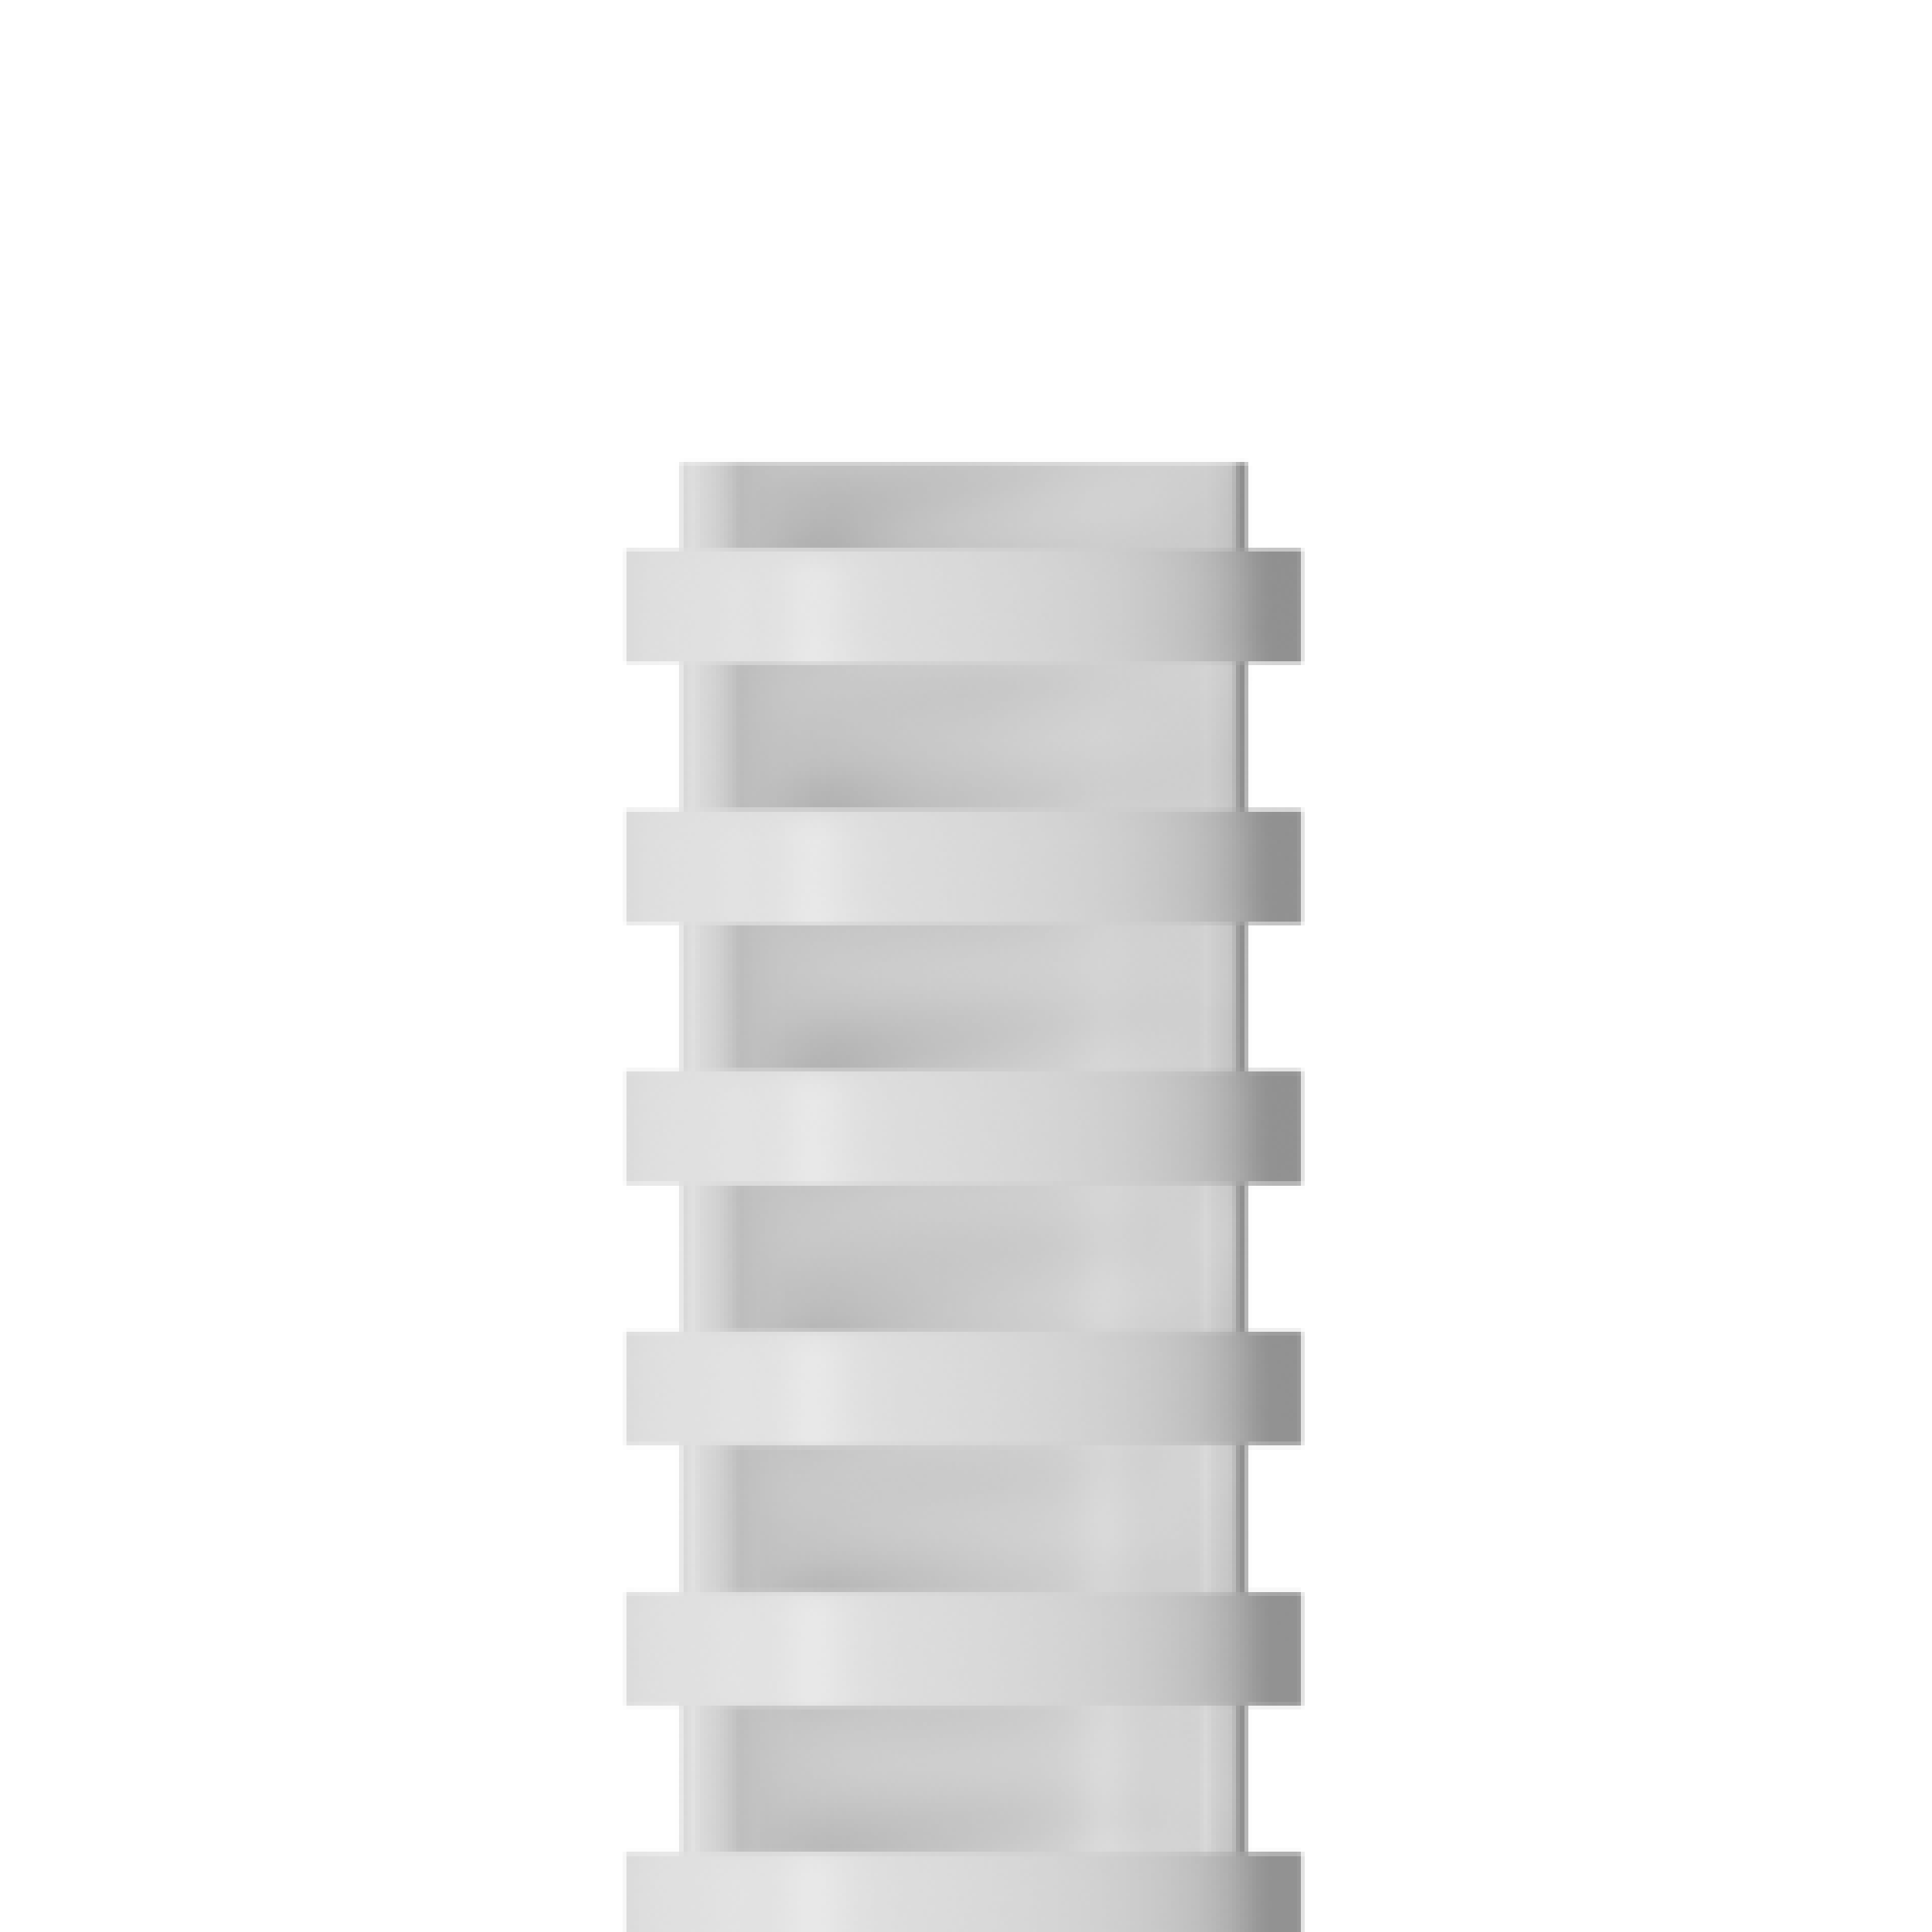 RAADO 35mm Plastic Spiral Binding Comb, White